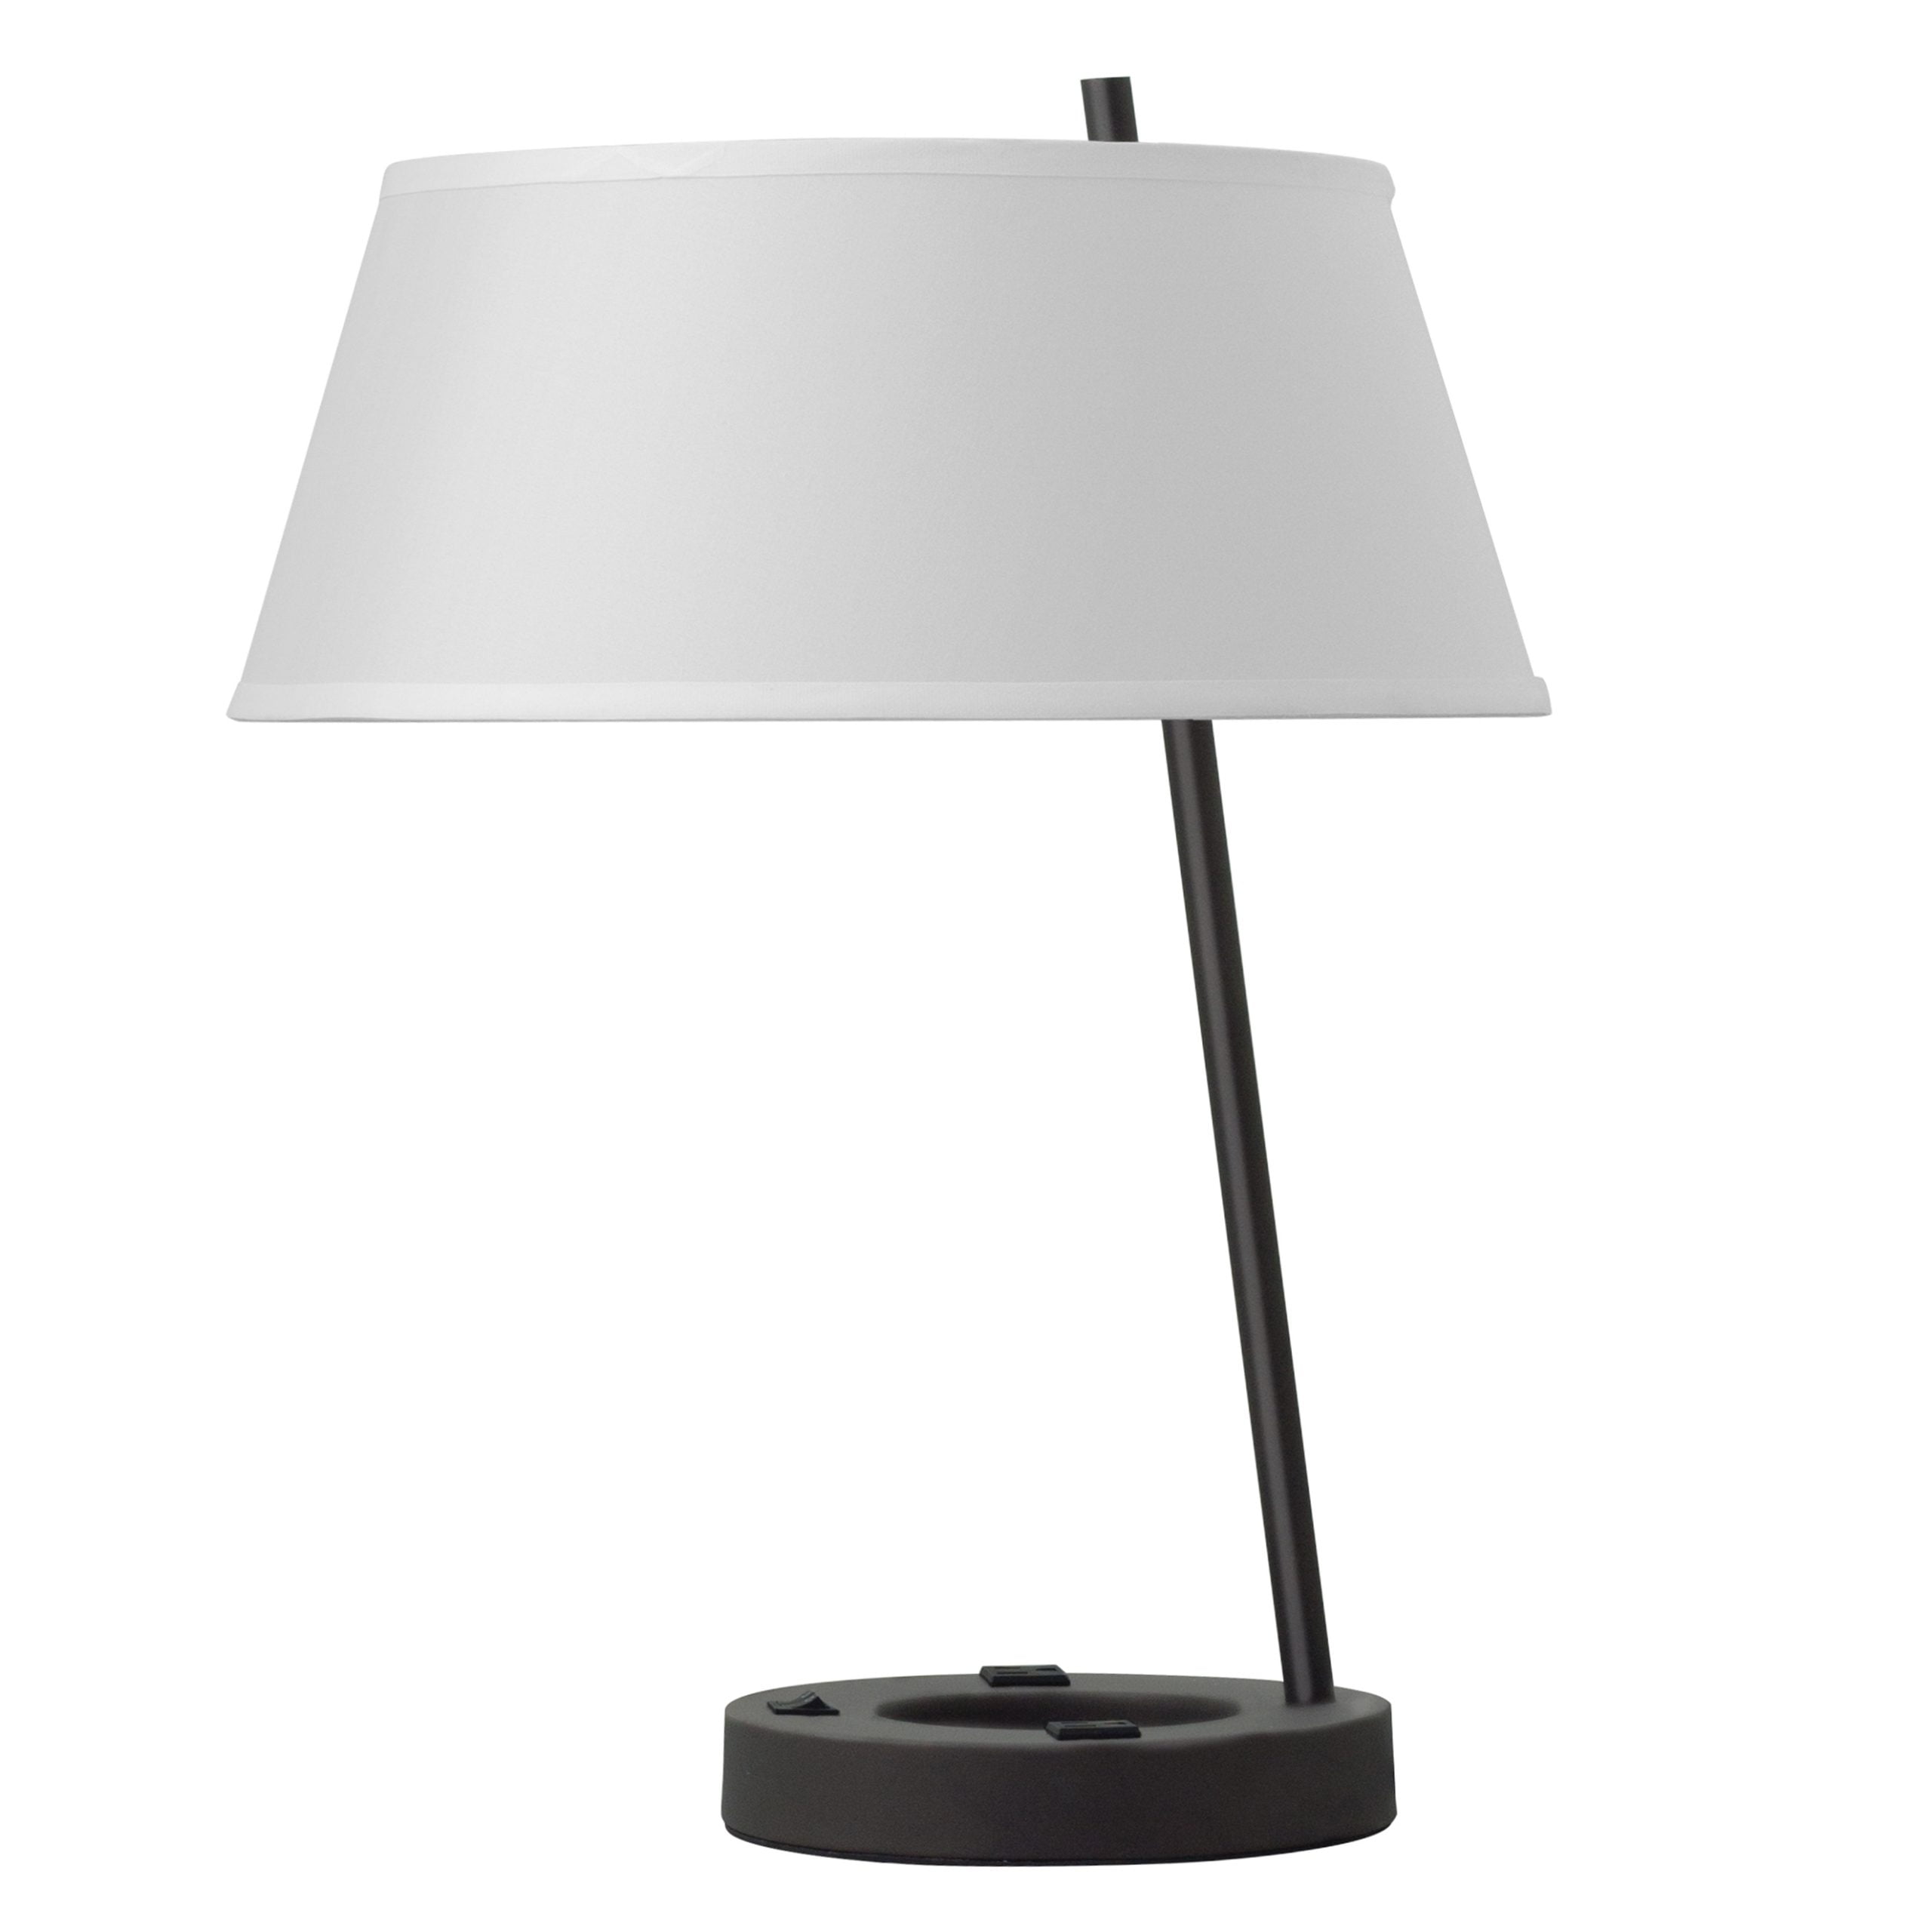 Stanton Table Lamp